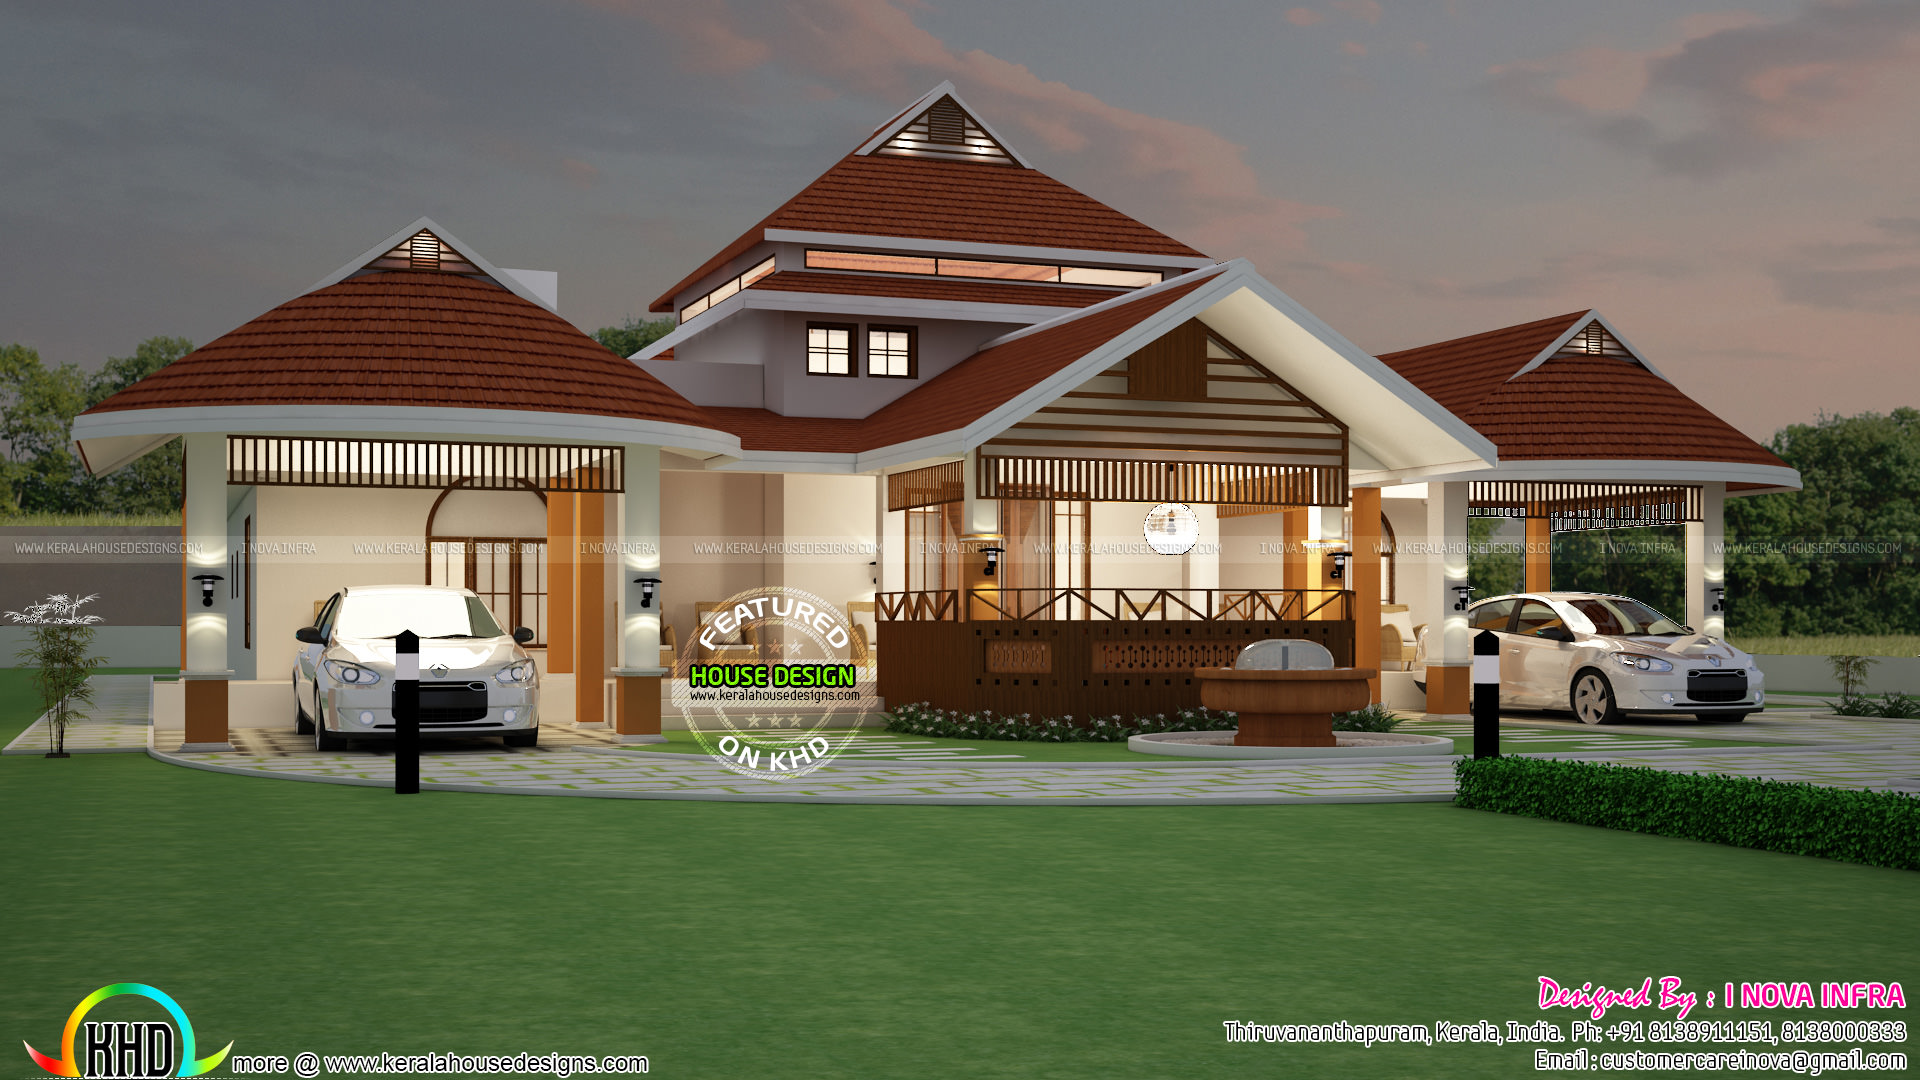 Kerala home design and floor plans - Big and beautiful Kerala home design